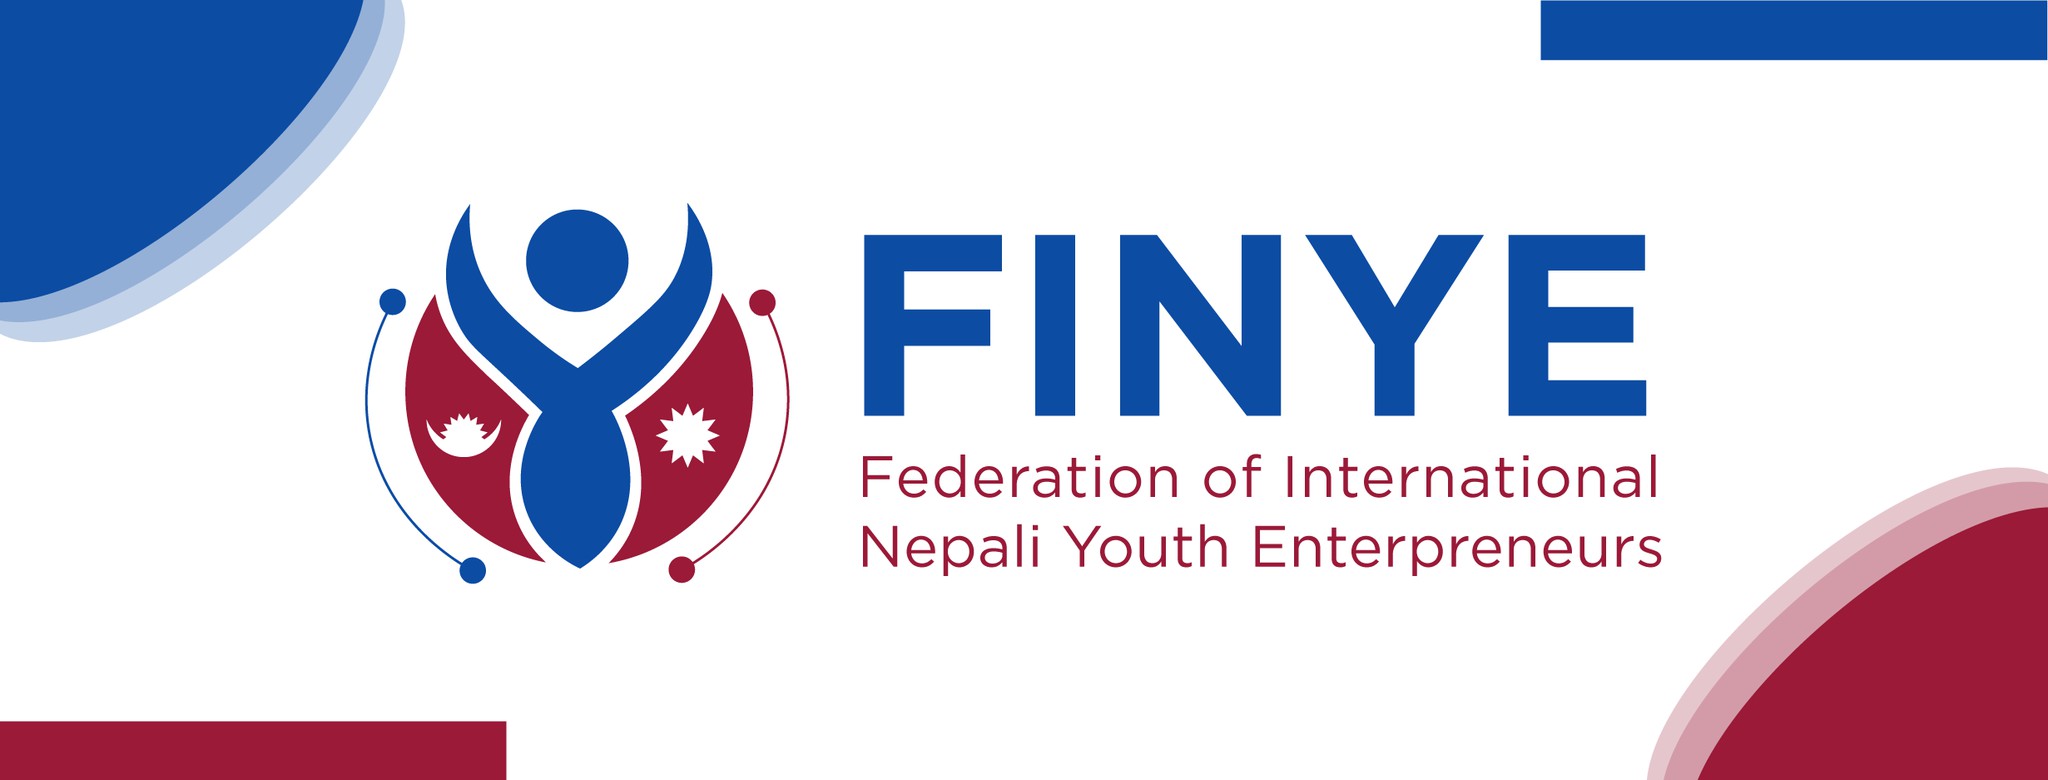 Federation of International Nepali Youth Enterpreneurs banner